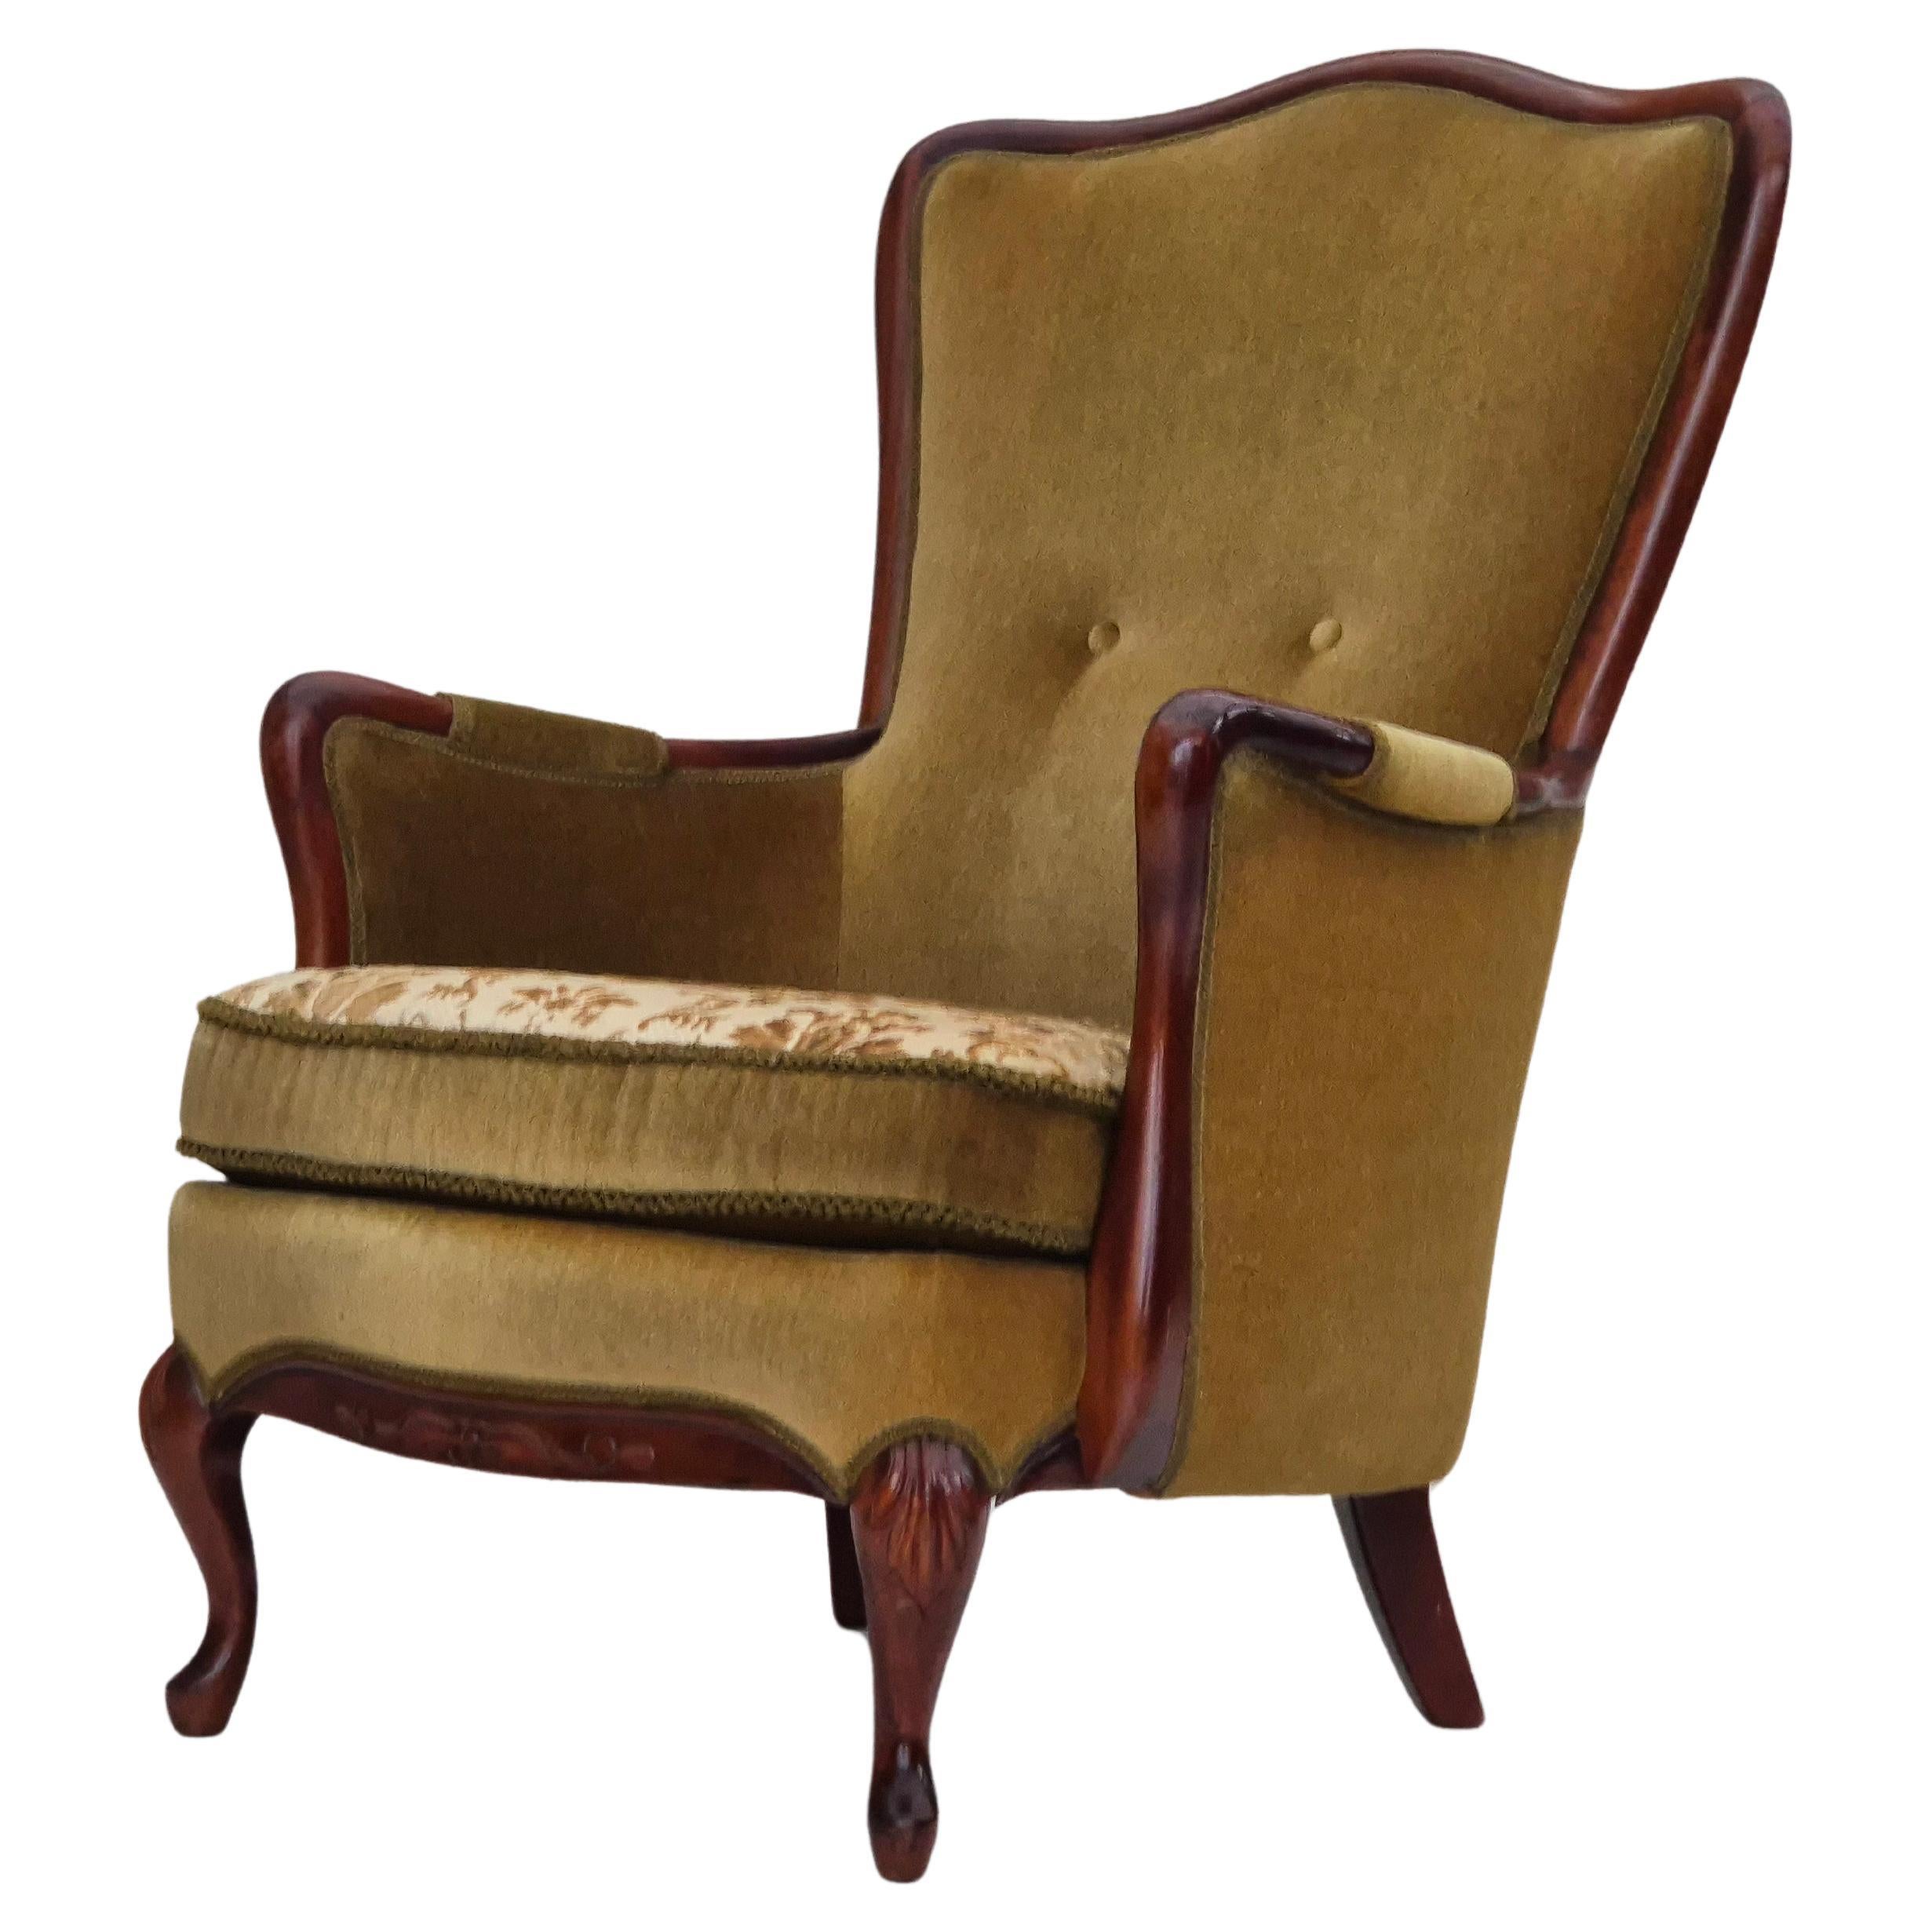 1950s, Danish highback armchair, original upholstery, green velour.